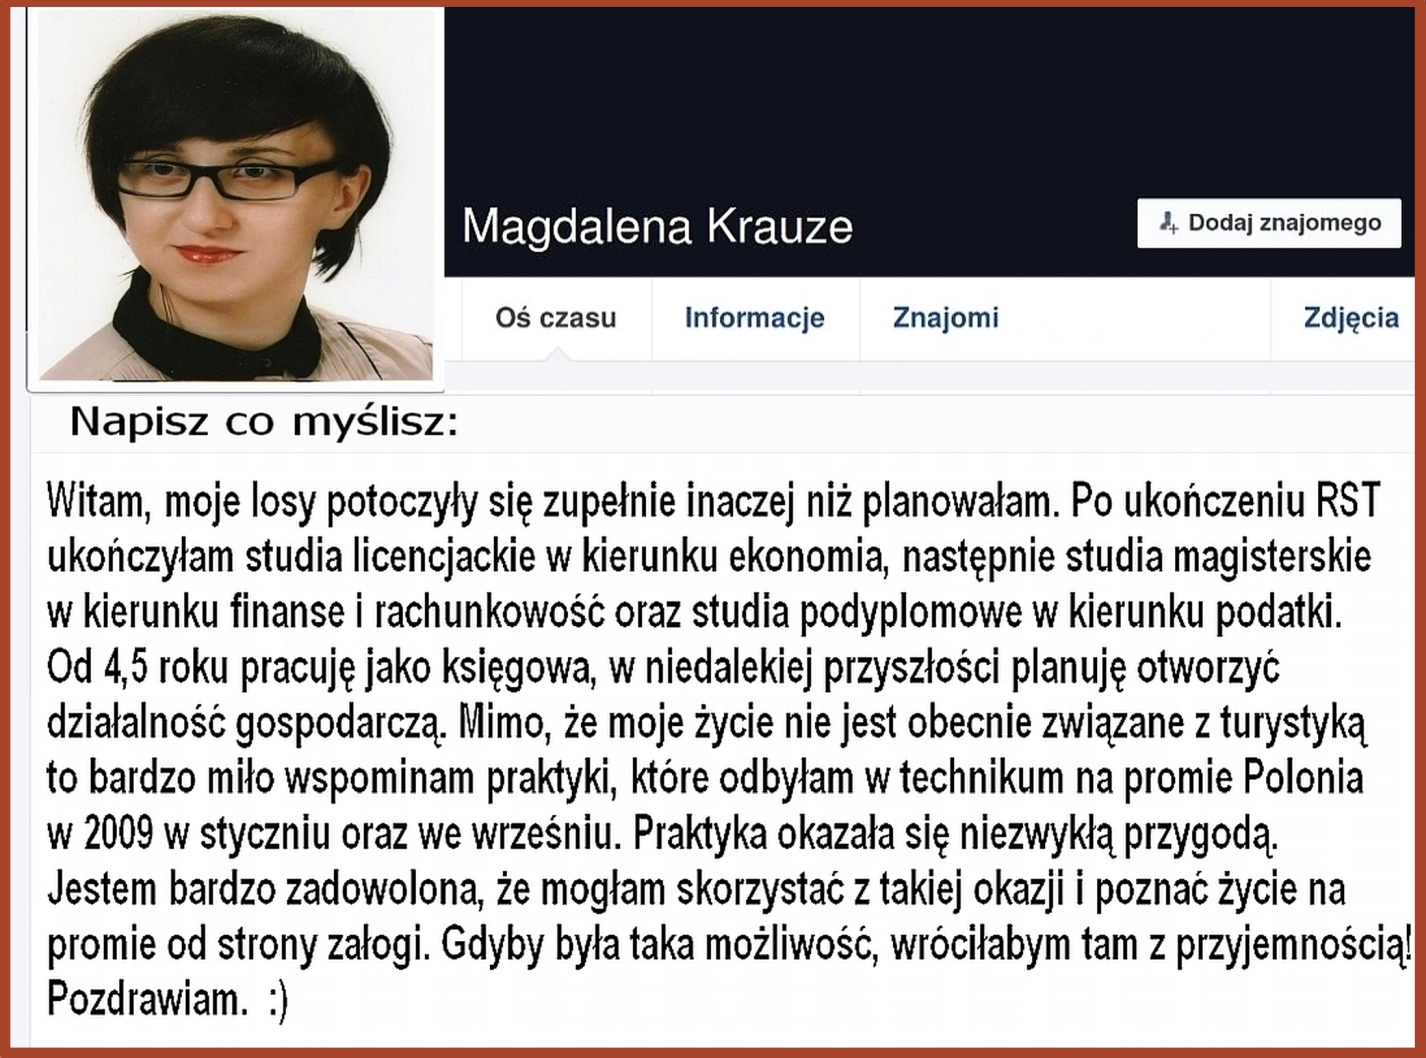 Friend 2016 Unity Line 24.facebook Magdalena Krauze